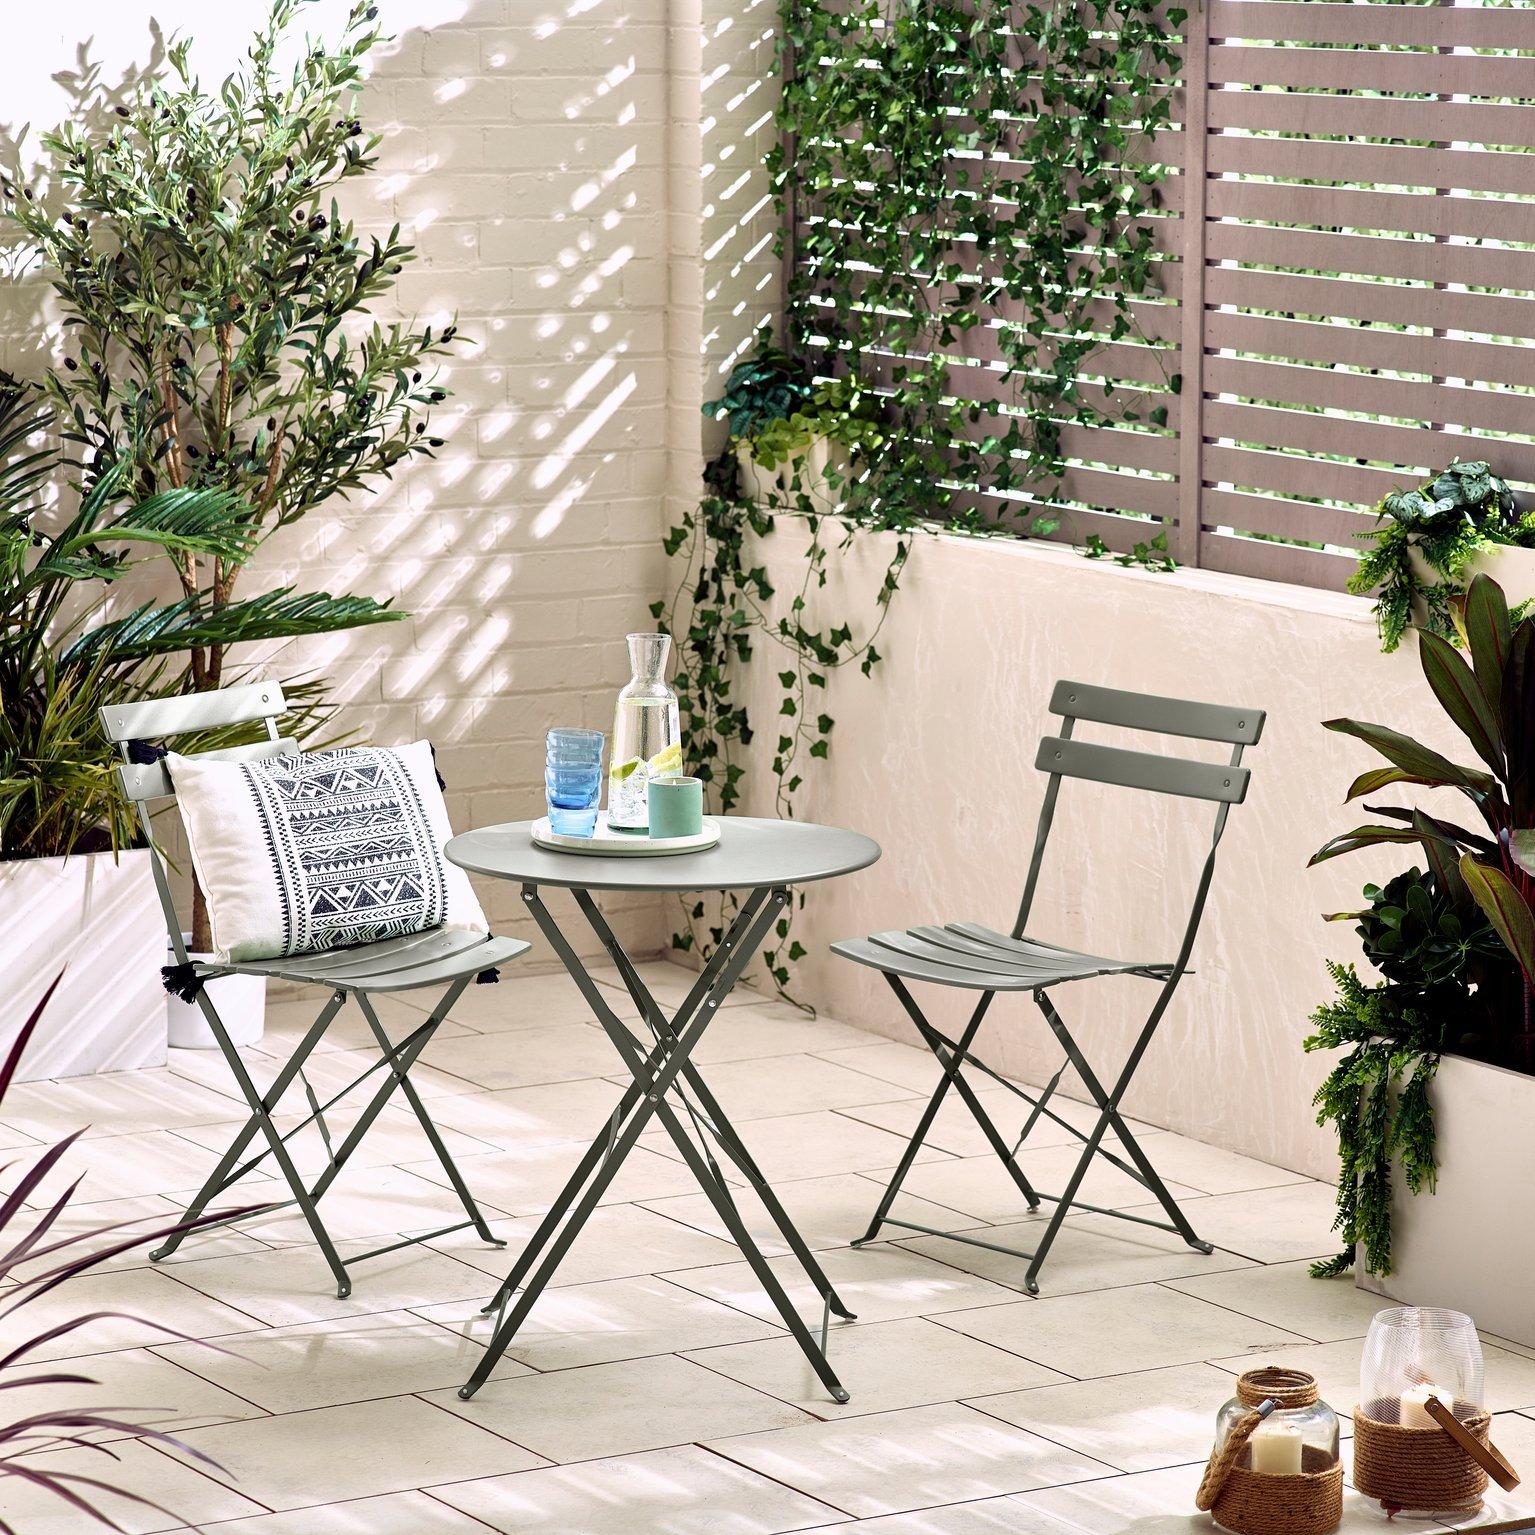 Cabo Outdoor 2 Seat Bistro Set - Metal Garden Bistro Table & Chairs - Folding Garden Table Set